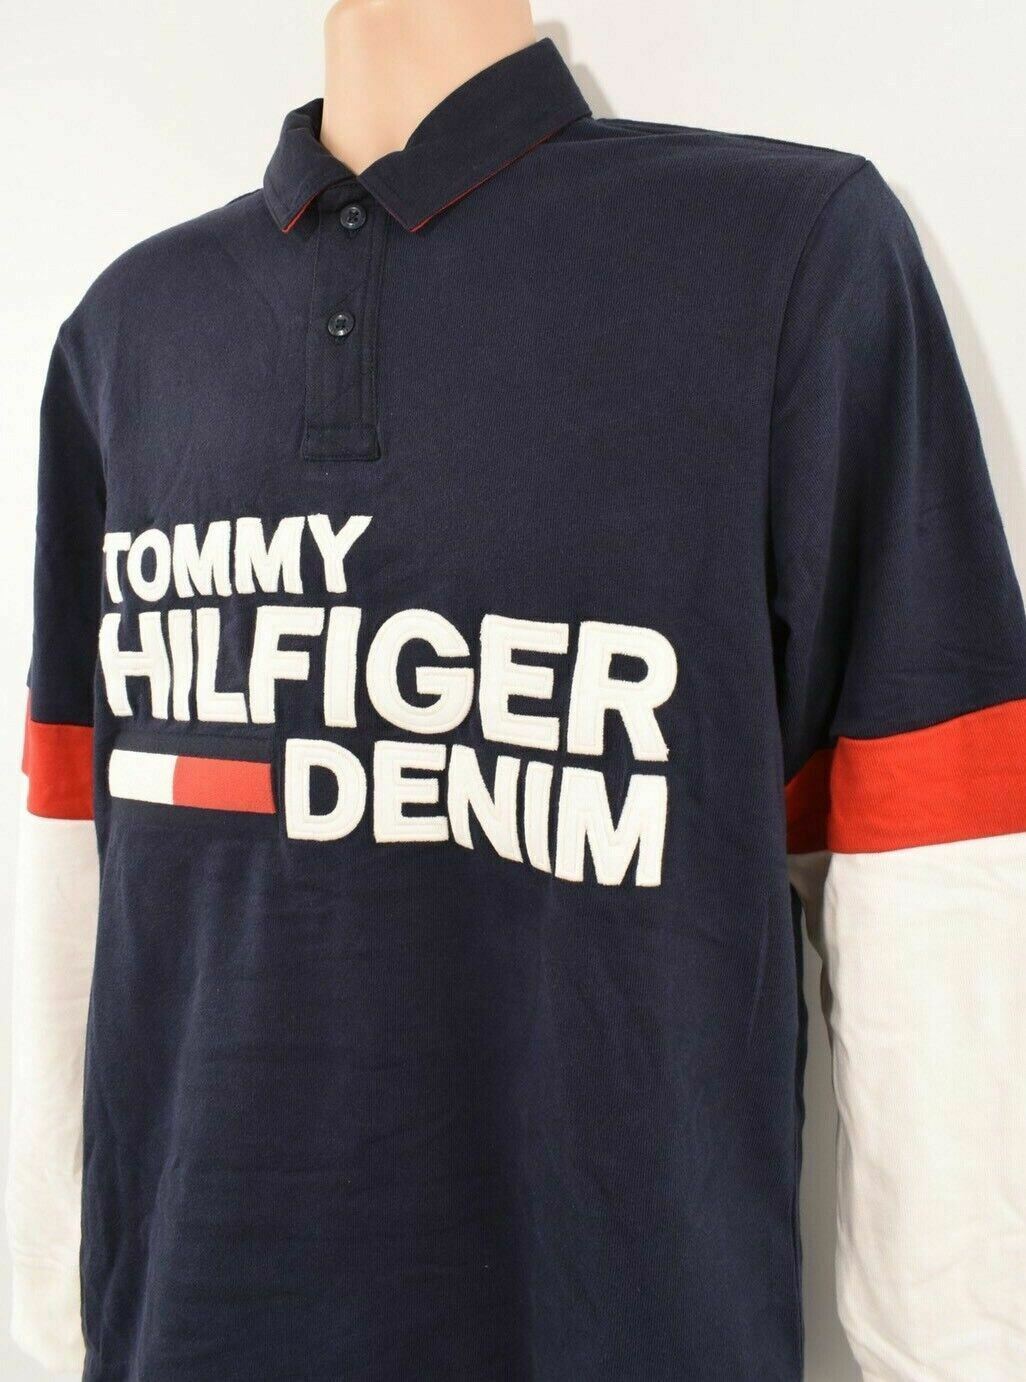 TOMMY HILFIGER Men's Long Sleeve Polo Shirt, Navy Blue, size S /size M /size L